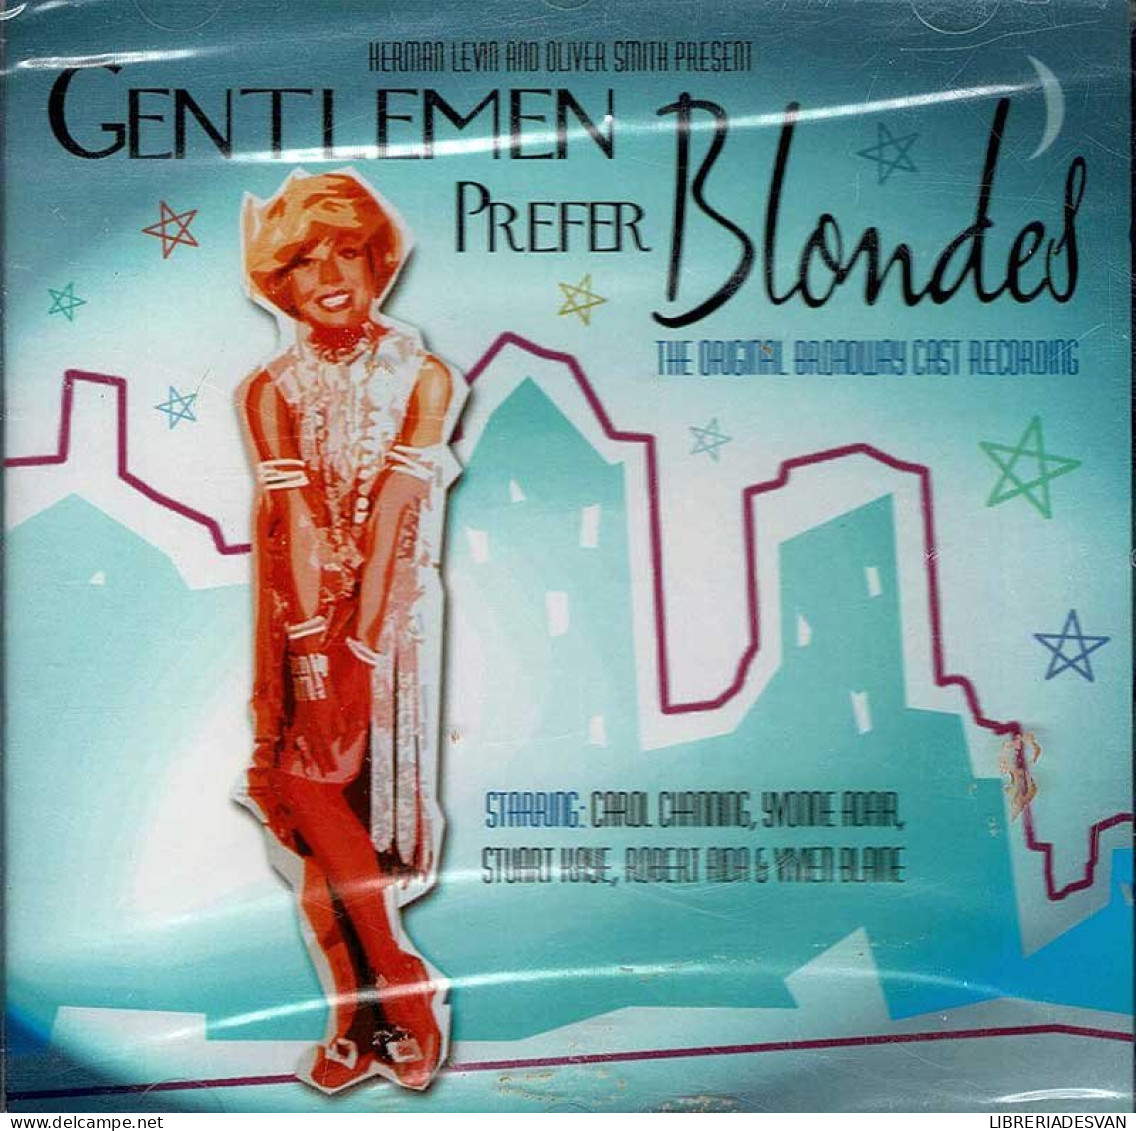 Gentlemen Prefer Blondes. The Original Broadway Cast Recording. CD (precintado) - Soundtracks, Film Music